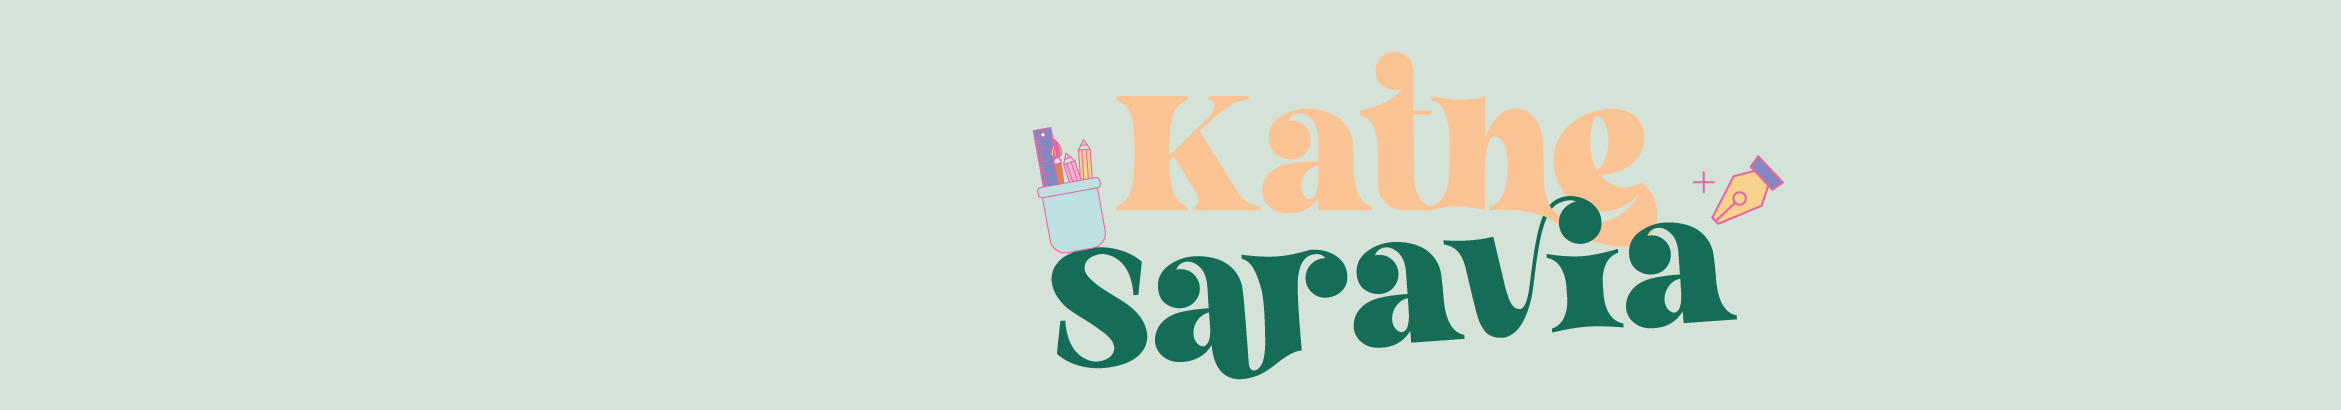 Banner profilu uživatele Kathe Saravia